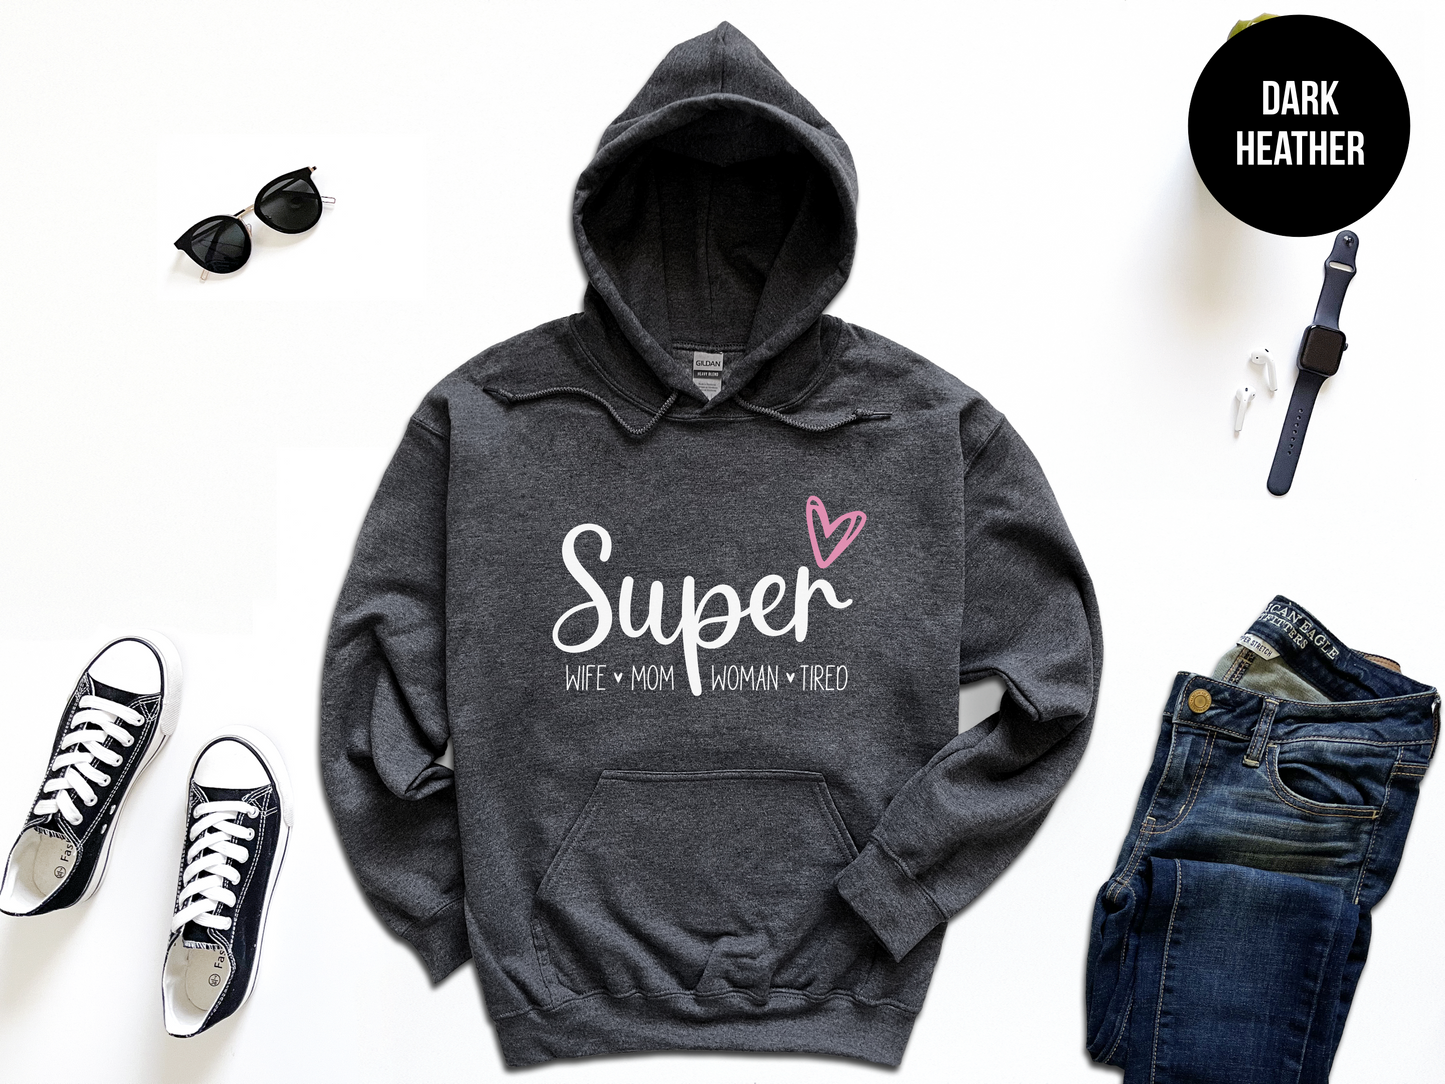 Super Wife, Super Mom, Super Woman, Super Tired Sweatshirt